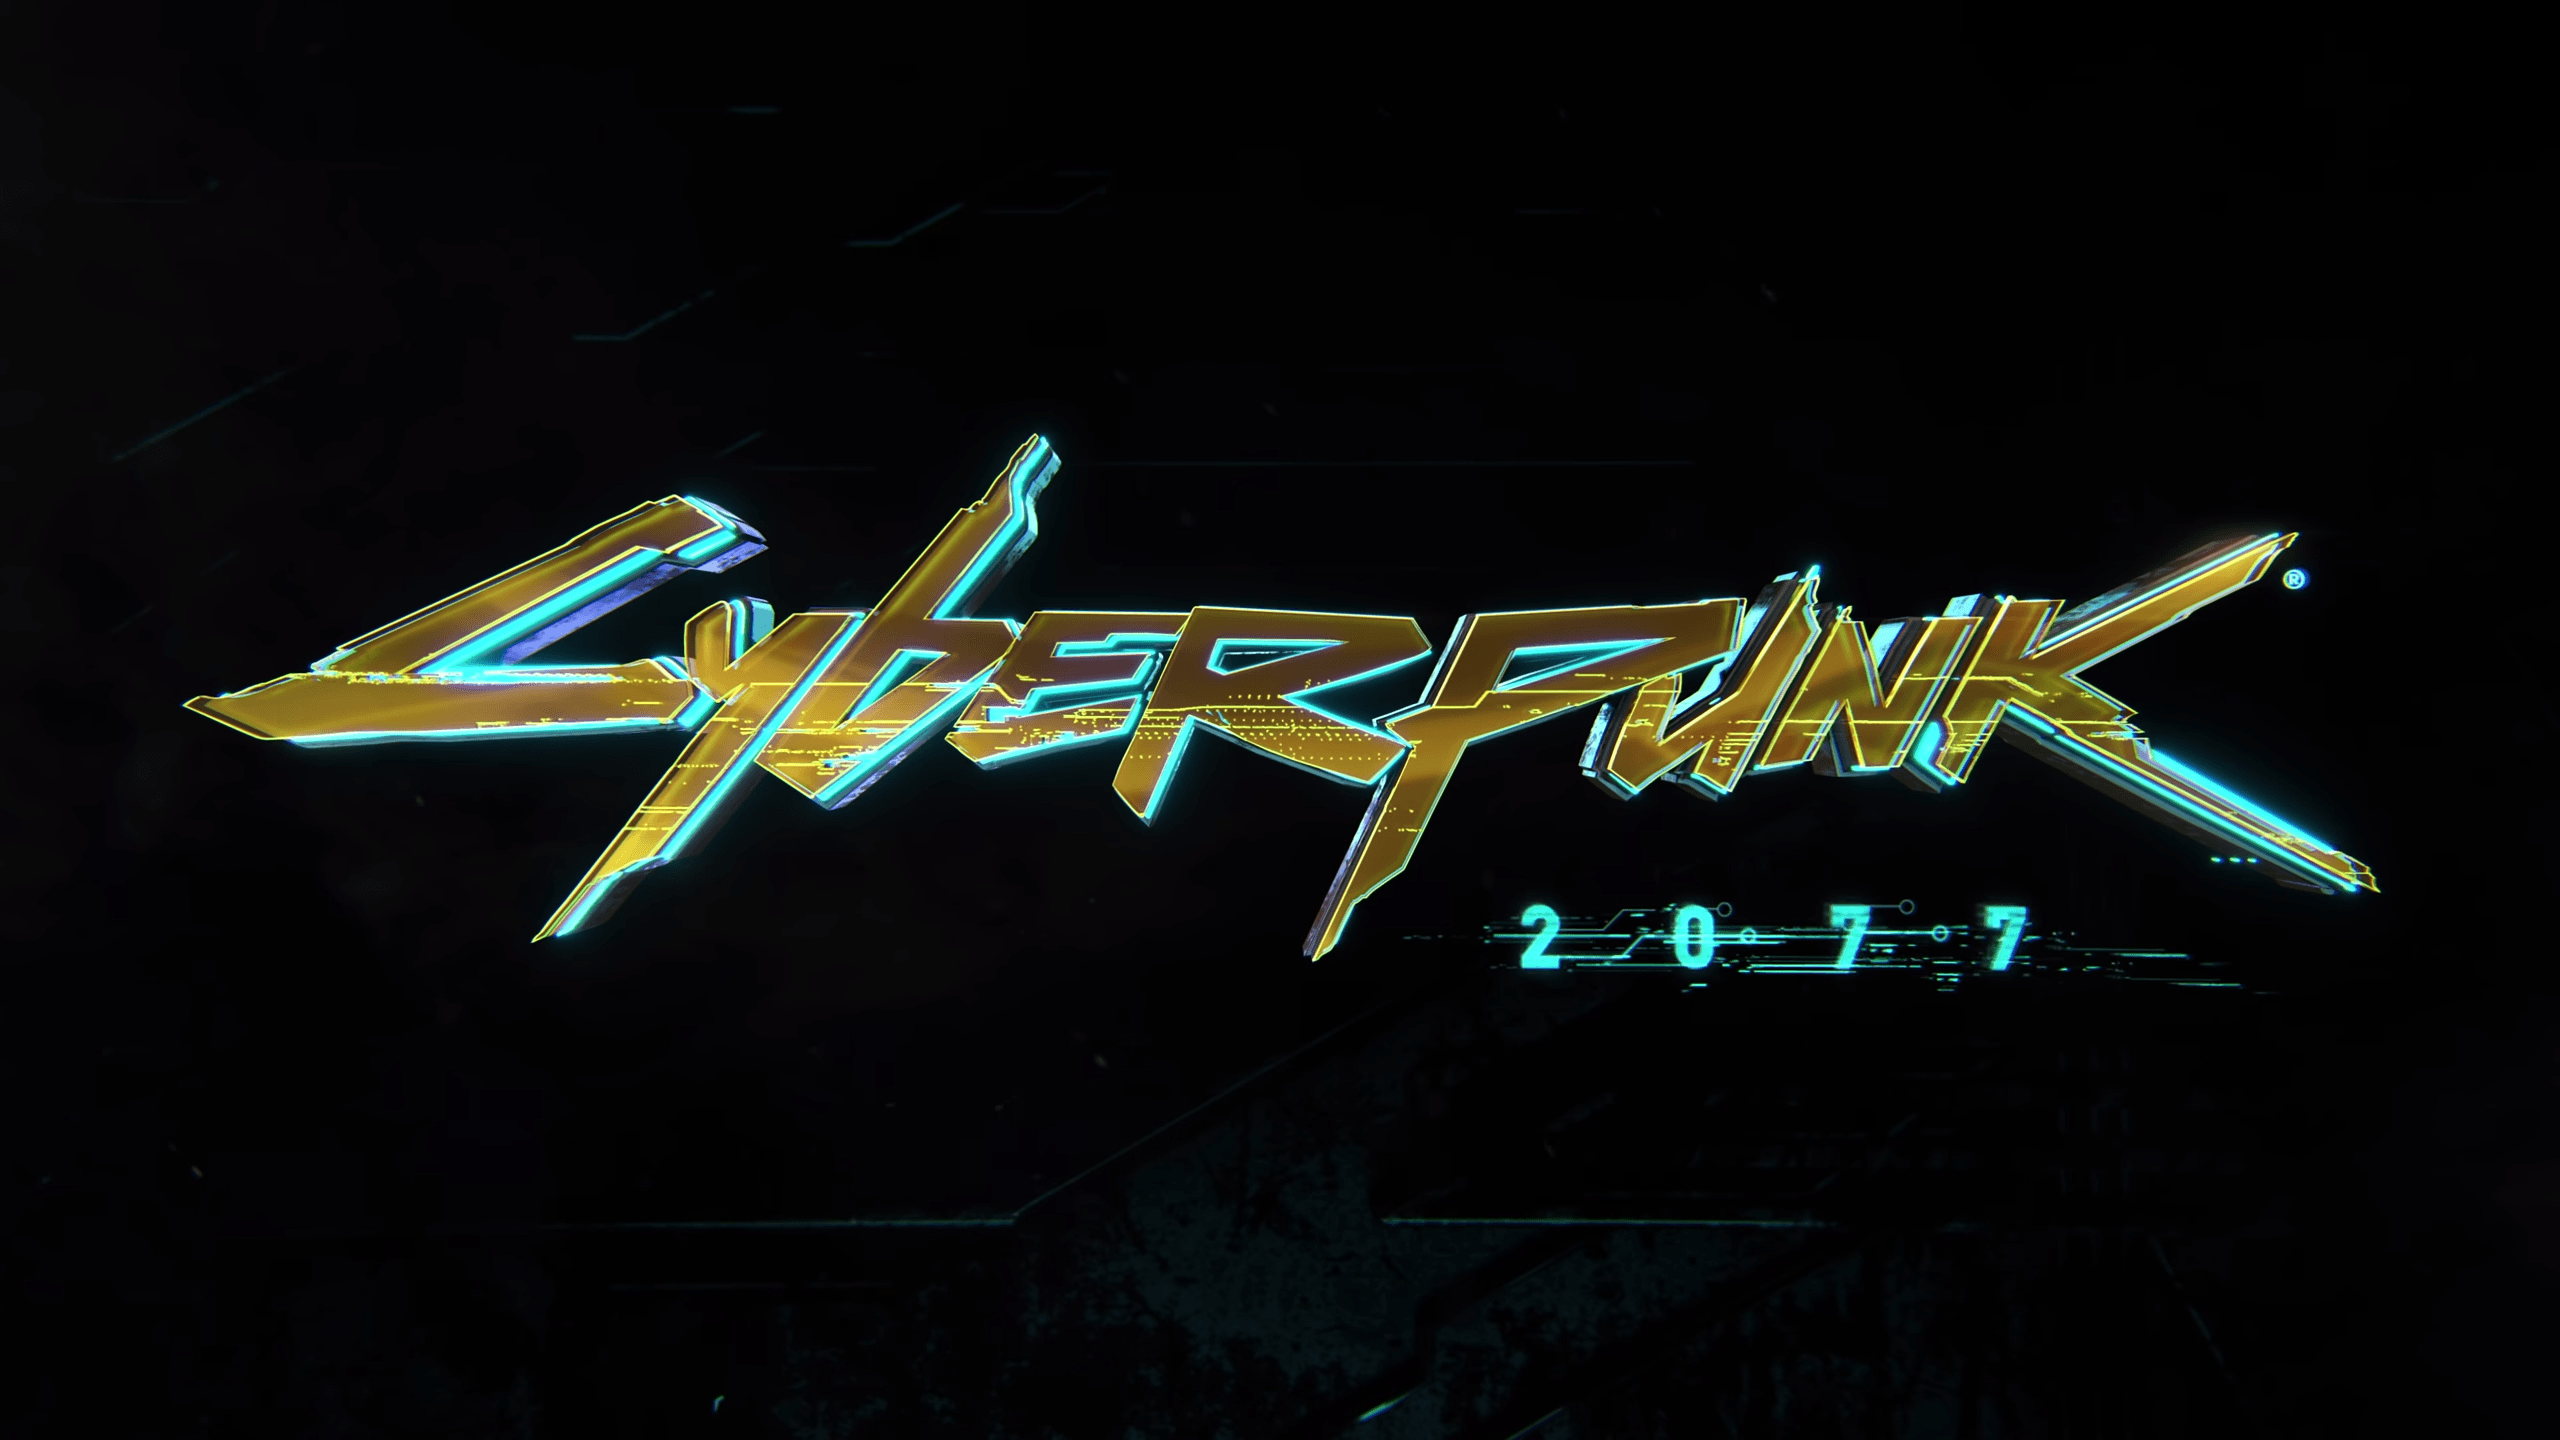 Cyberpunk 2077 “Mercenary of the Dark Future” PS4 Theme Is Free. Cyberpunk Cyberpunk, Simple background